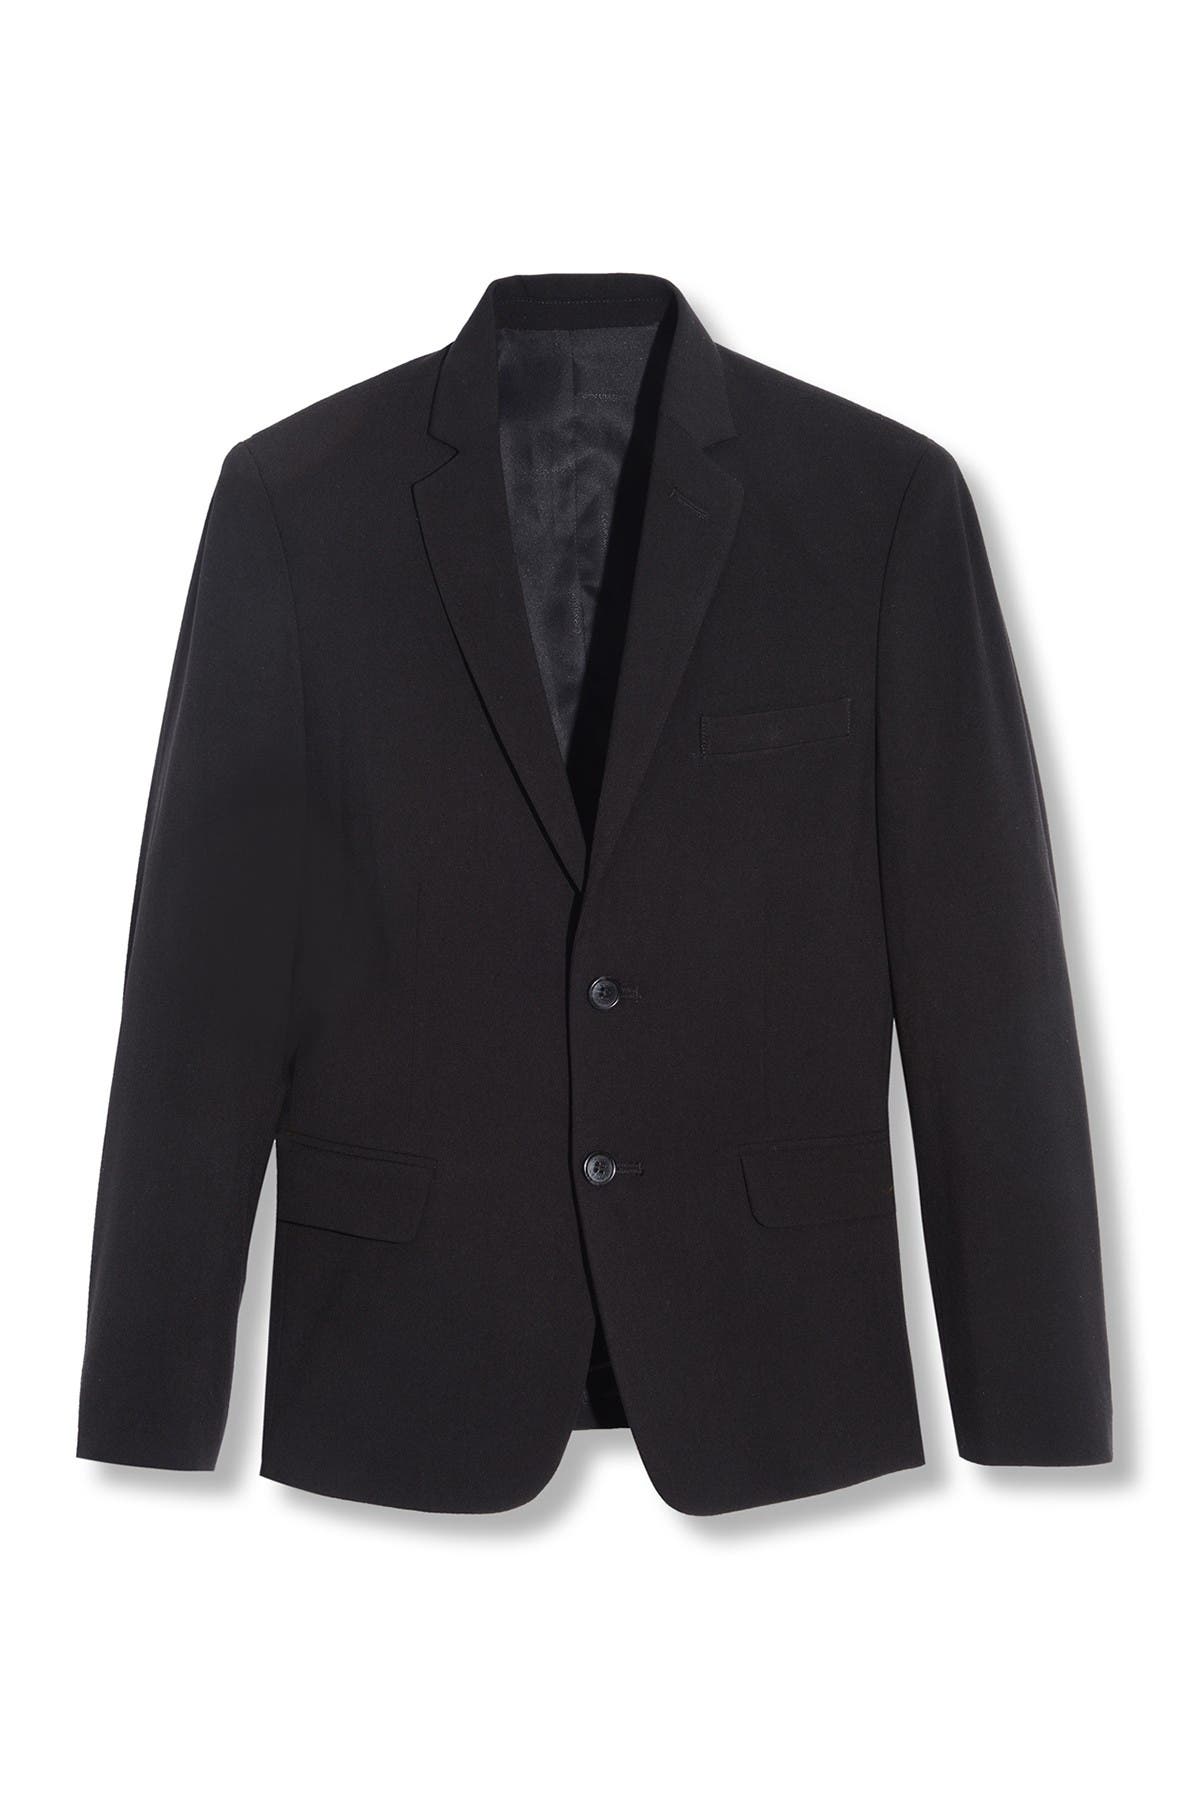 calvin klein black suit jacket